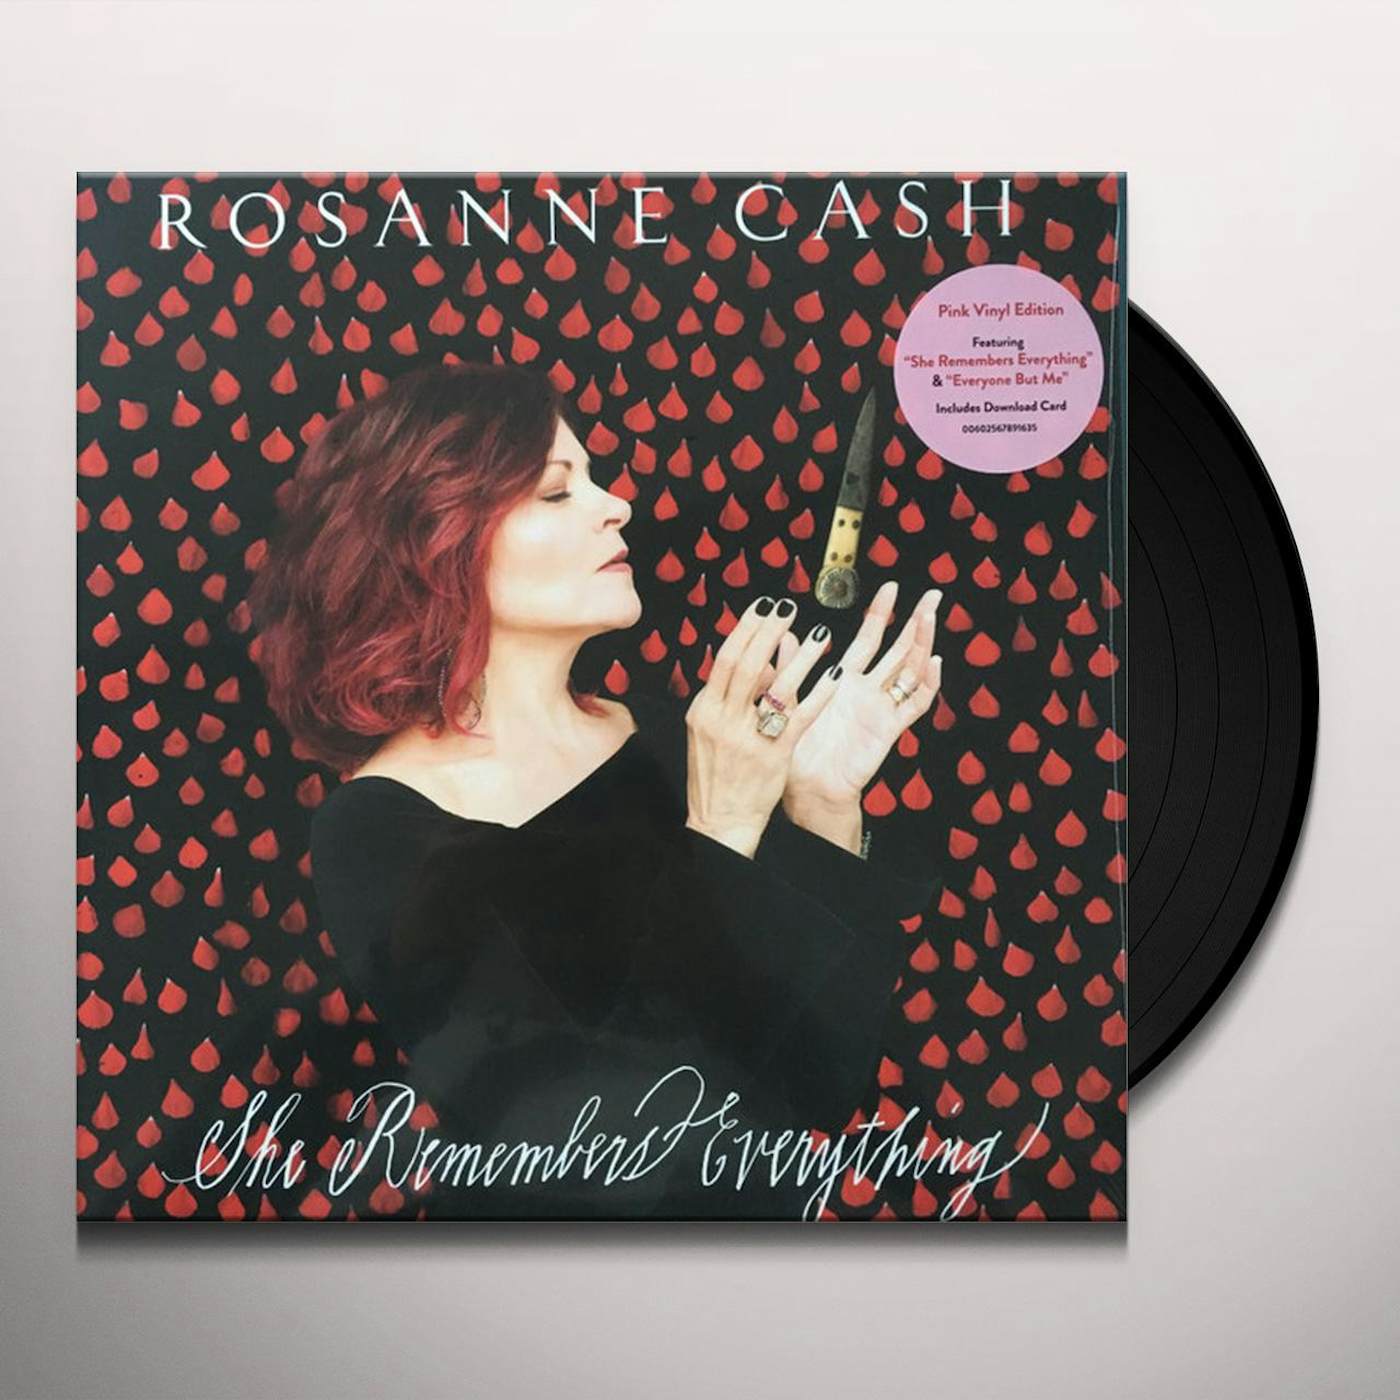 Rosanne Cash SHE REMEMBERS EVERYTHING (PINK VINYL) Vinyl Record